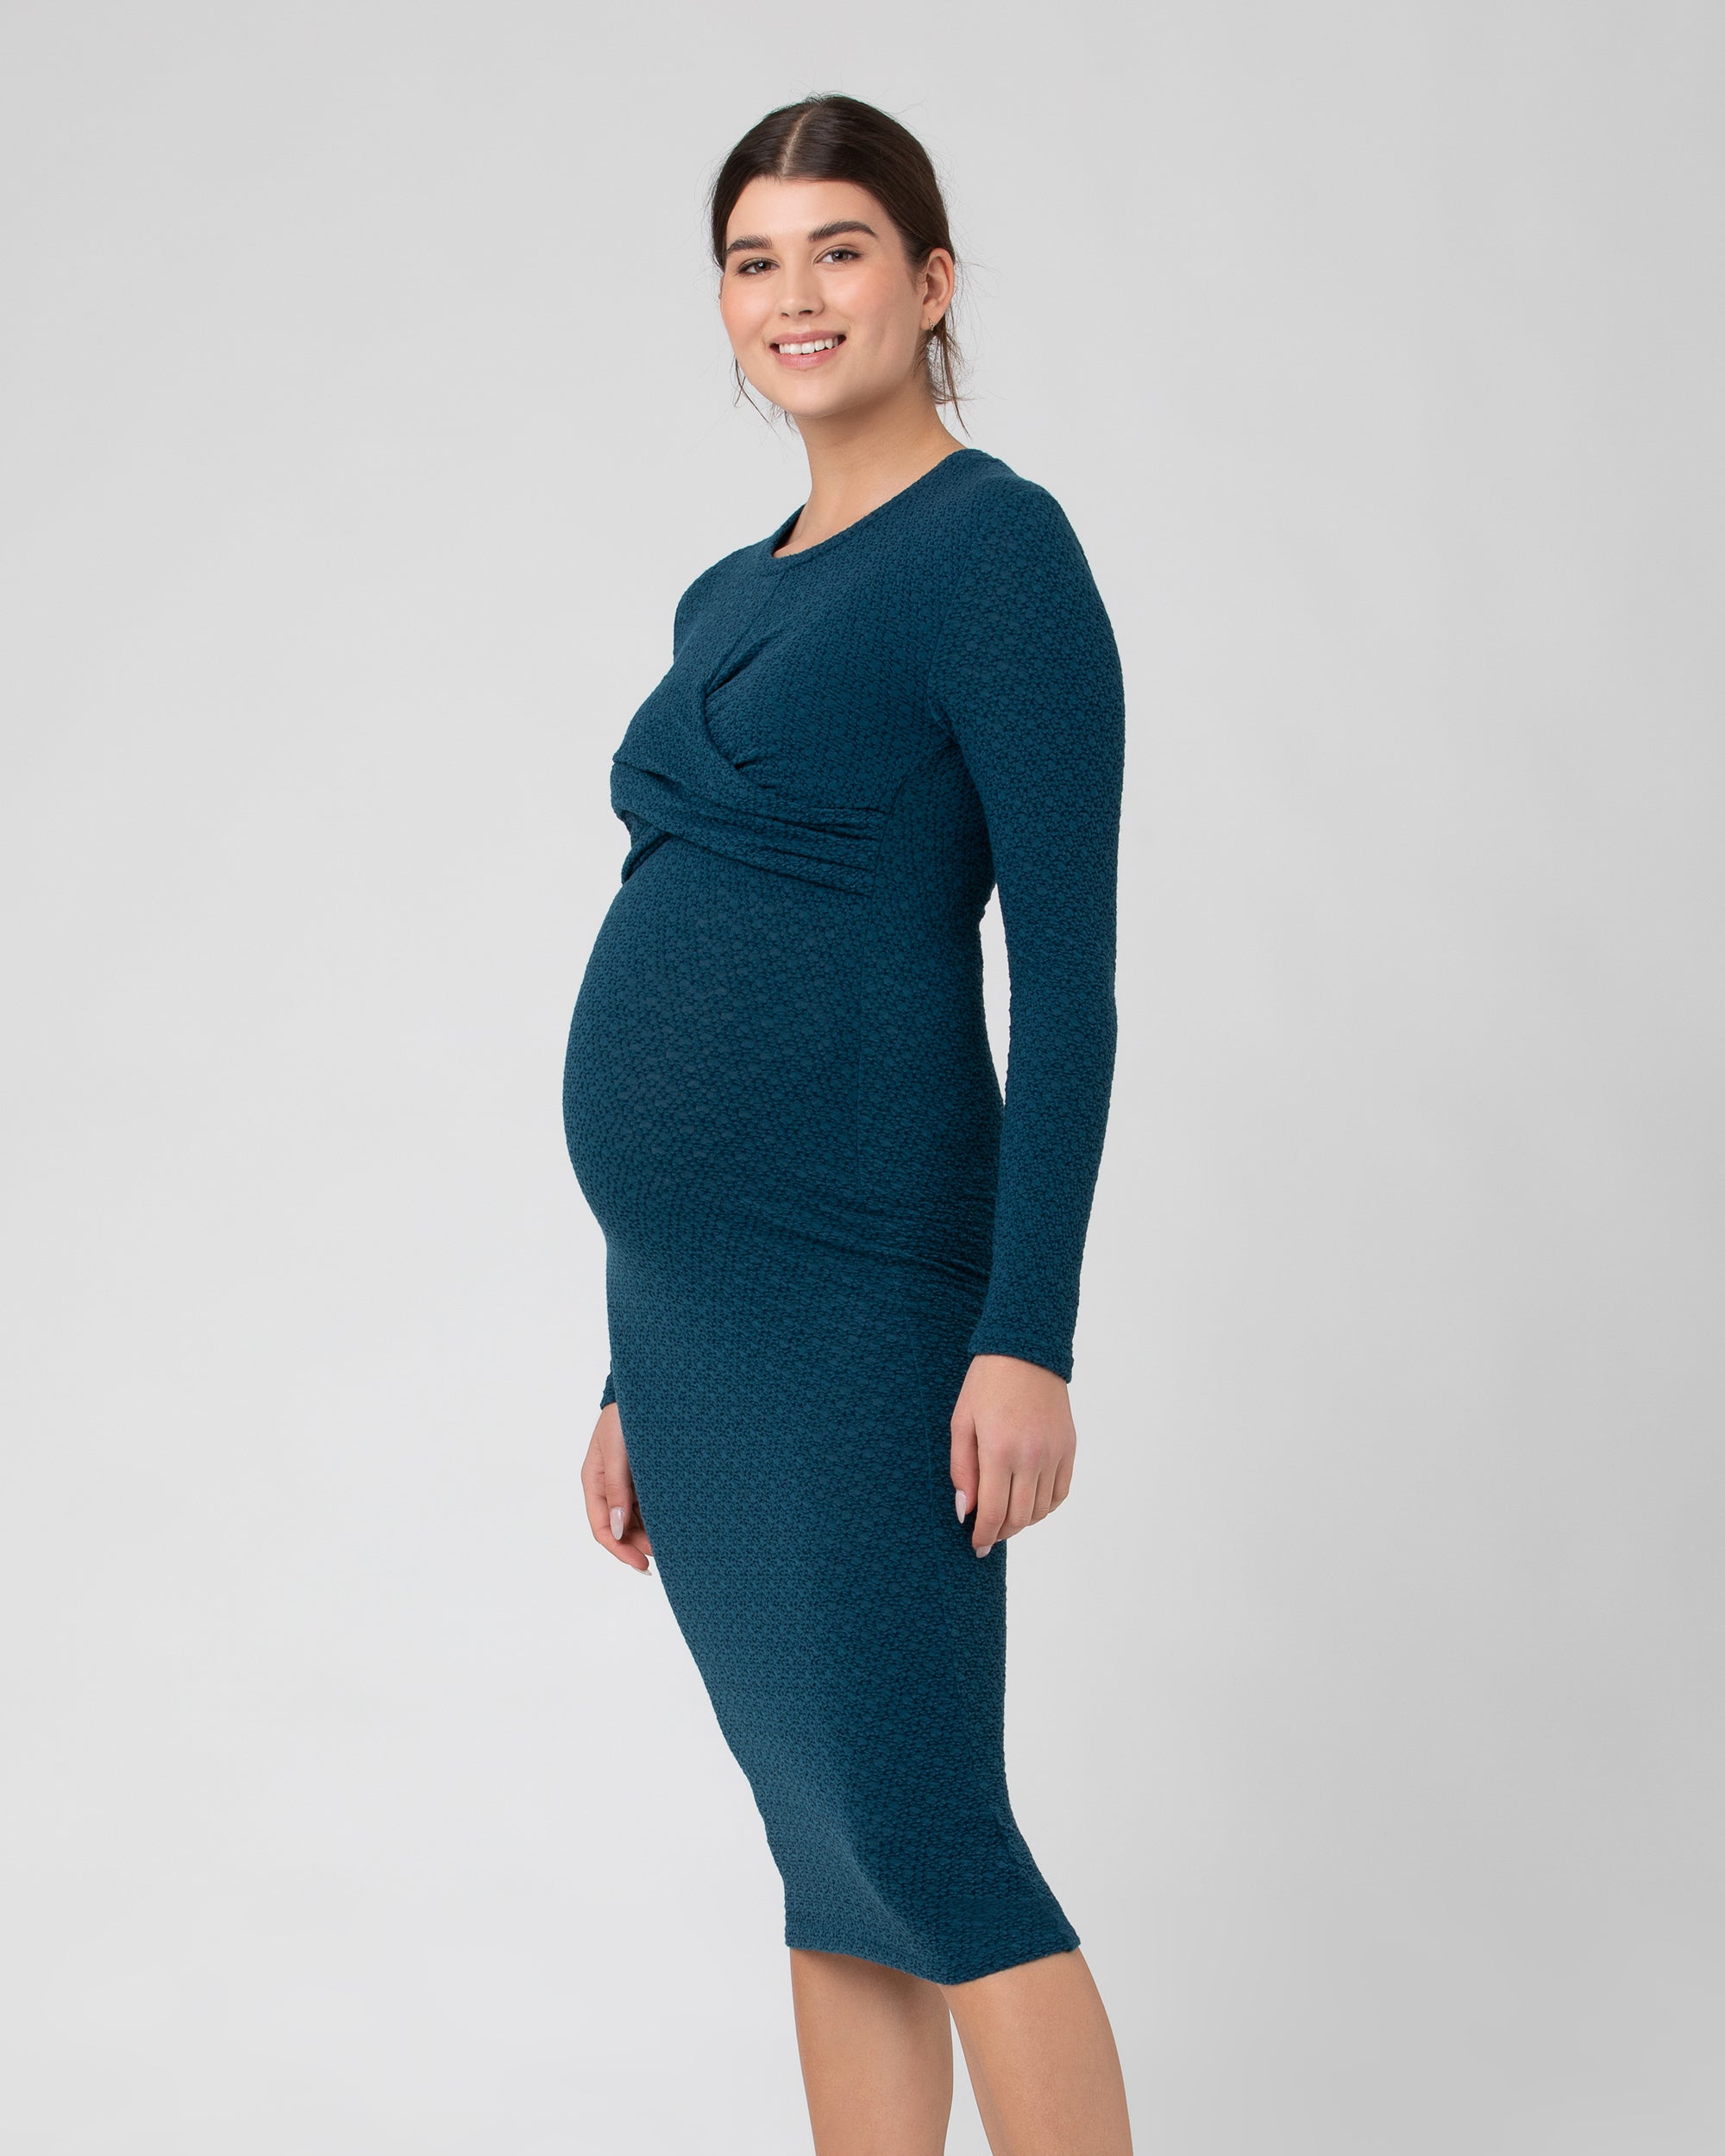 Ripe Maternity Samatha Satin BLK Dress - SMALL (6) FAST FREE SHIP US SELLER  NWT